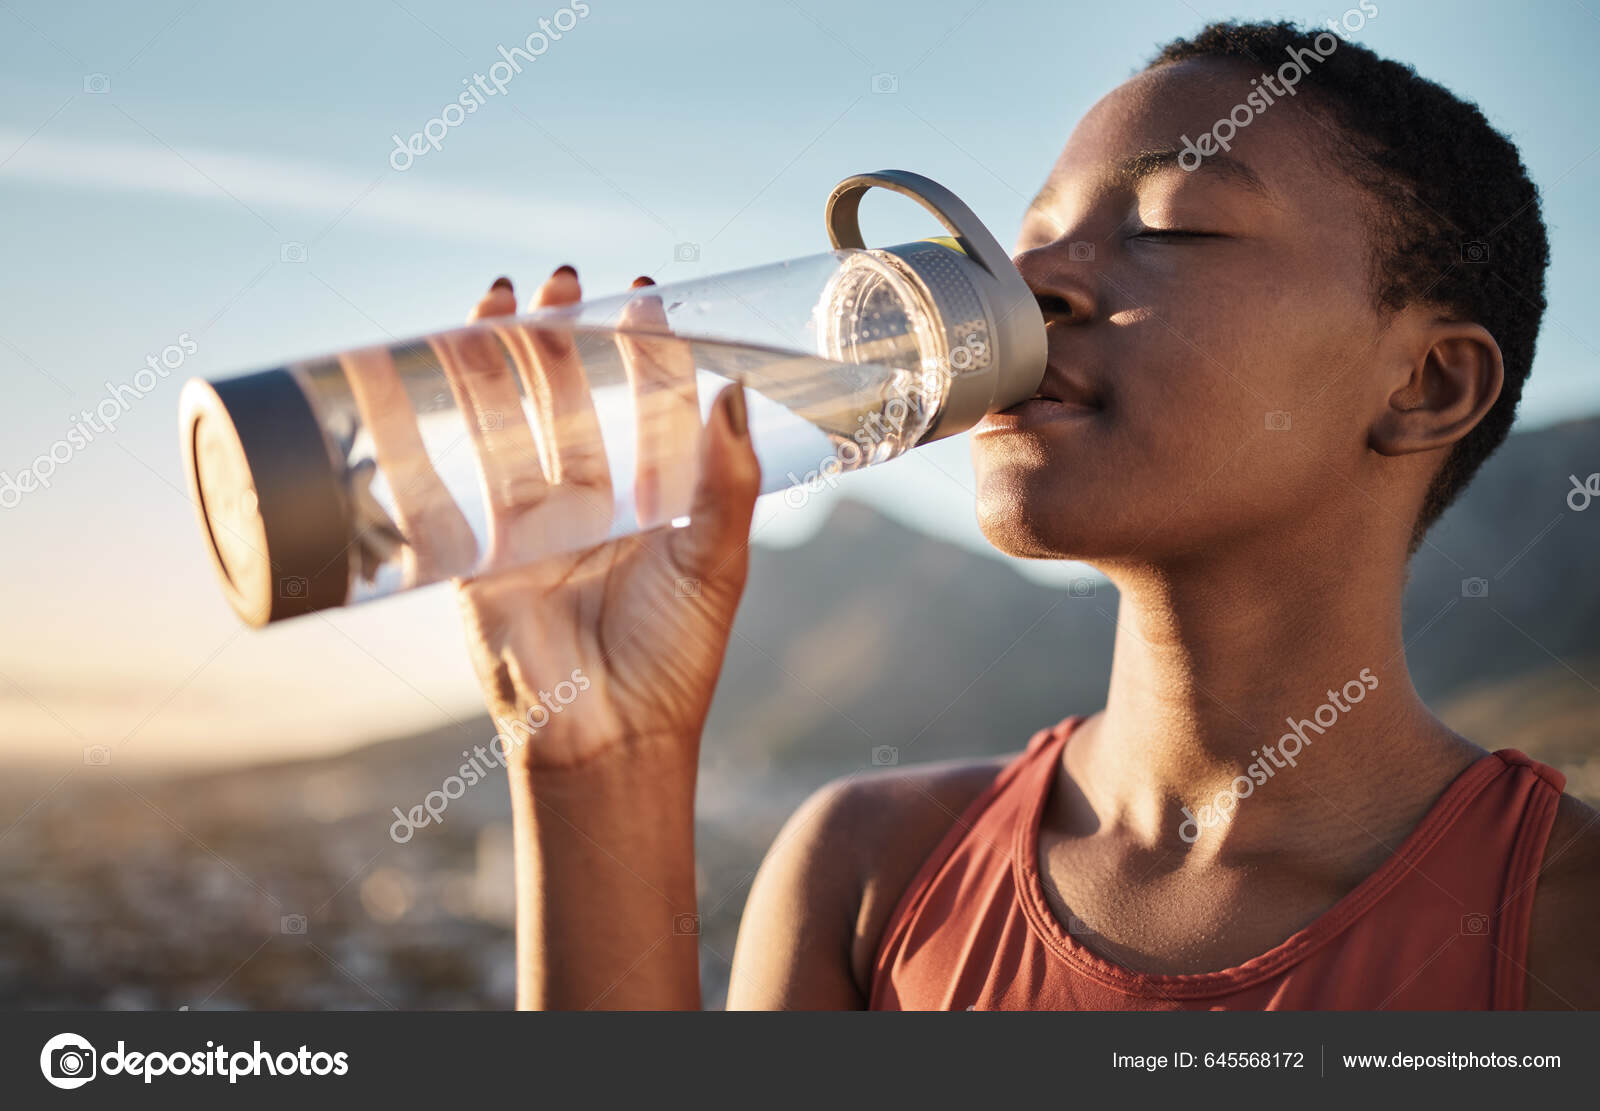 https://st5.depositphotos.com/62628780/64556/i/1600/depositphotos_645568172-stock-photo-fitness-black-woman-drinking-water.jpg